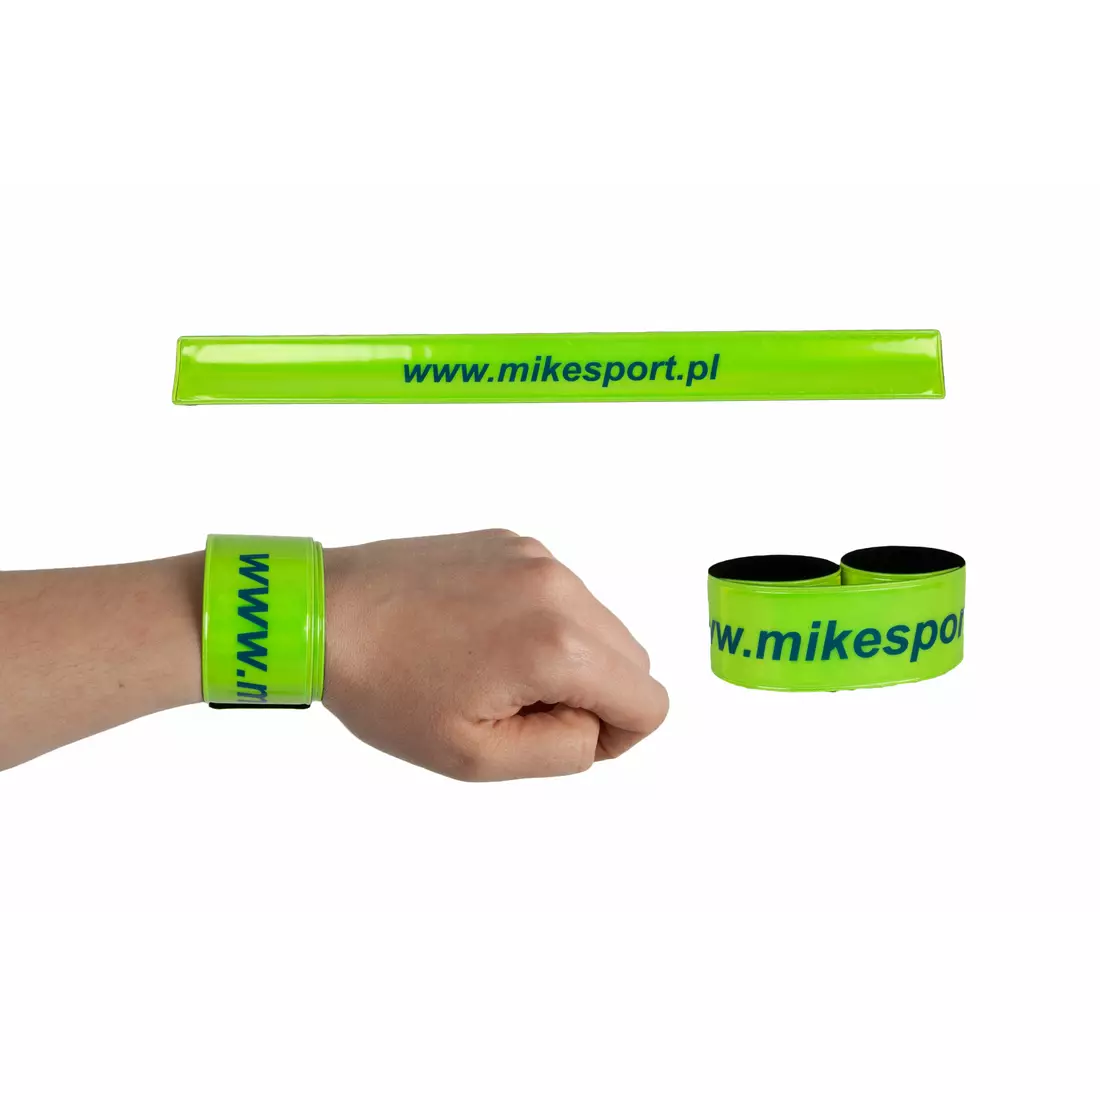 Mikesport - reflexní páska na ruku. logo - fluor